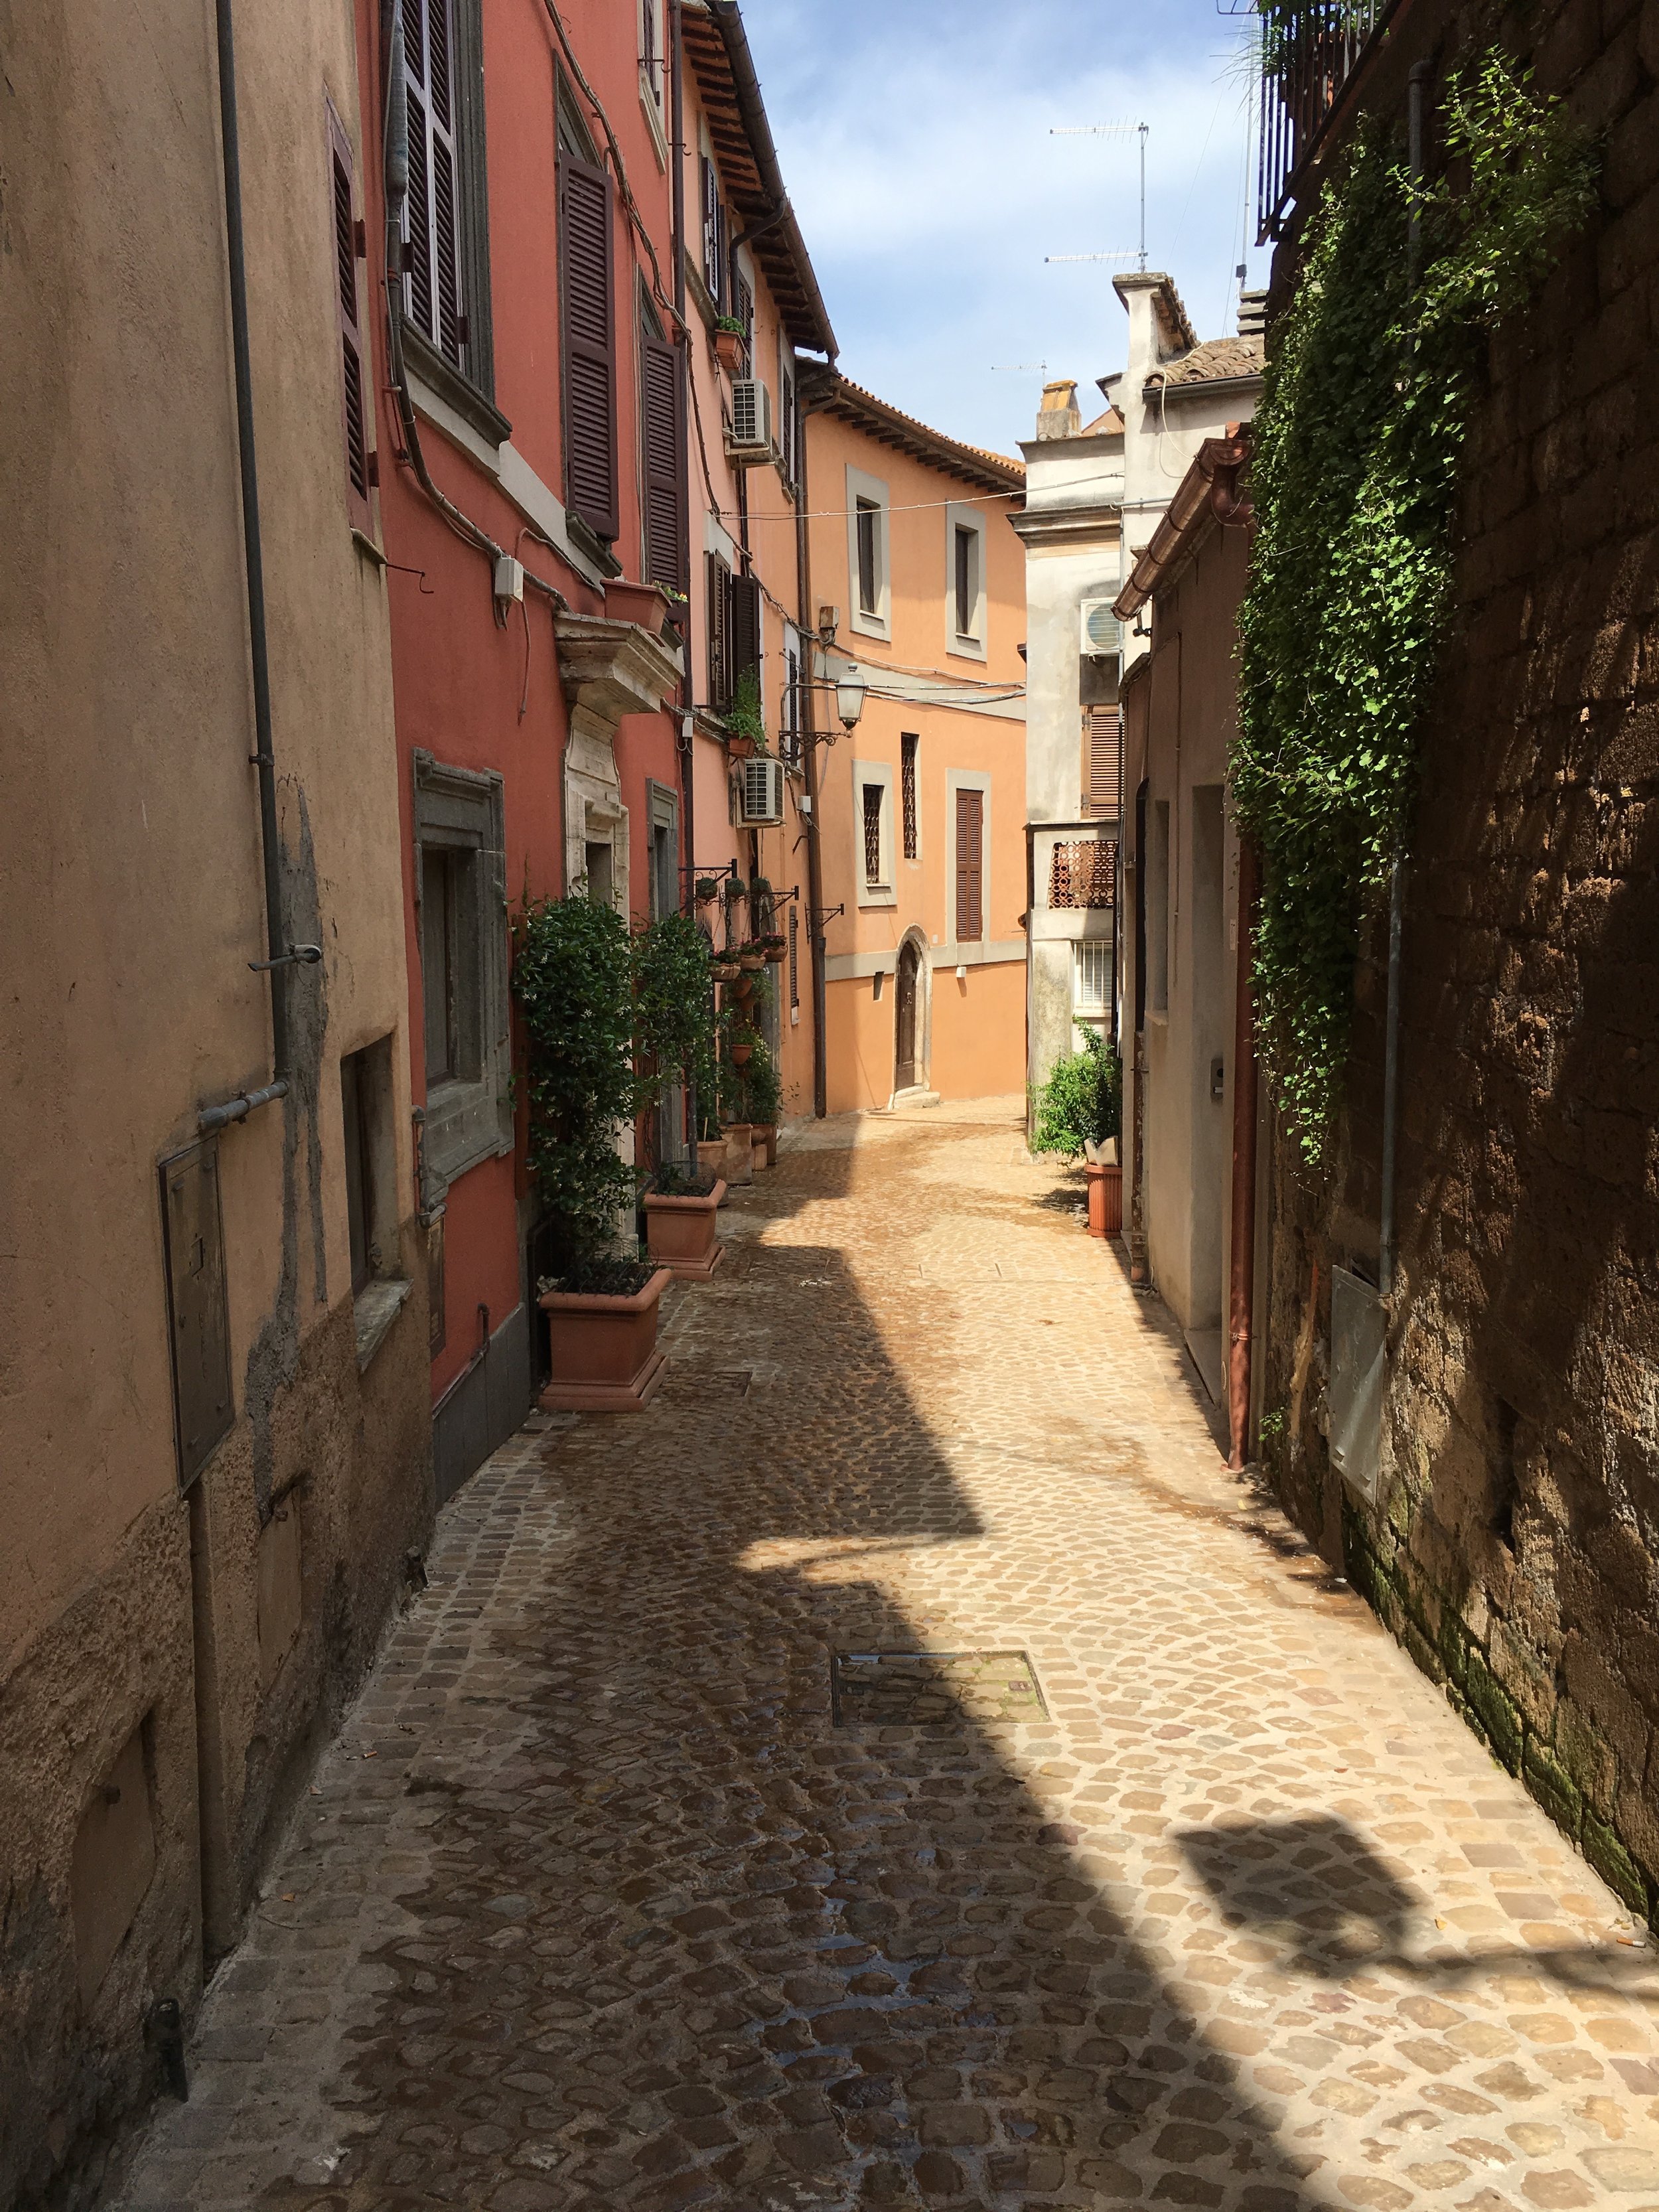 My ancestors' street in Ponzano Romano